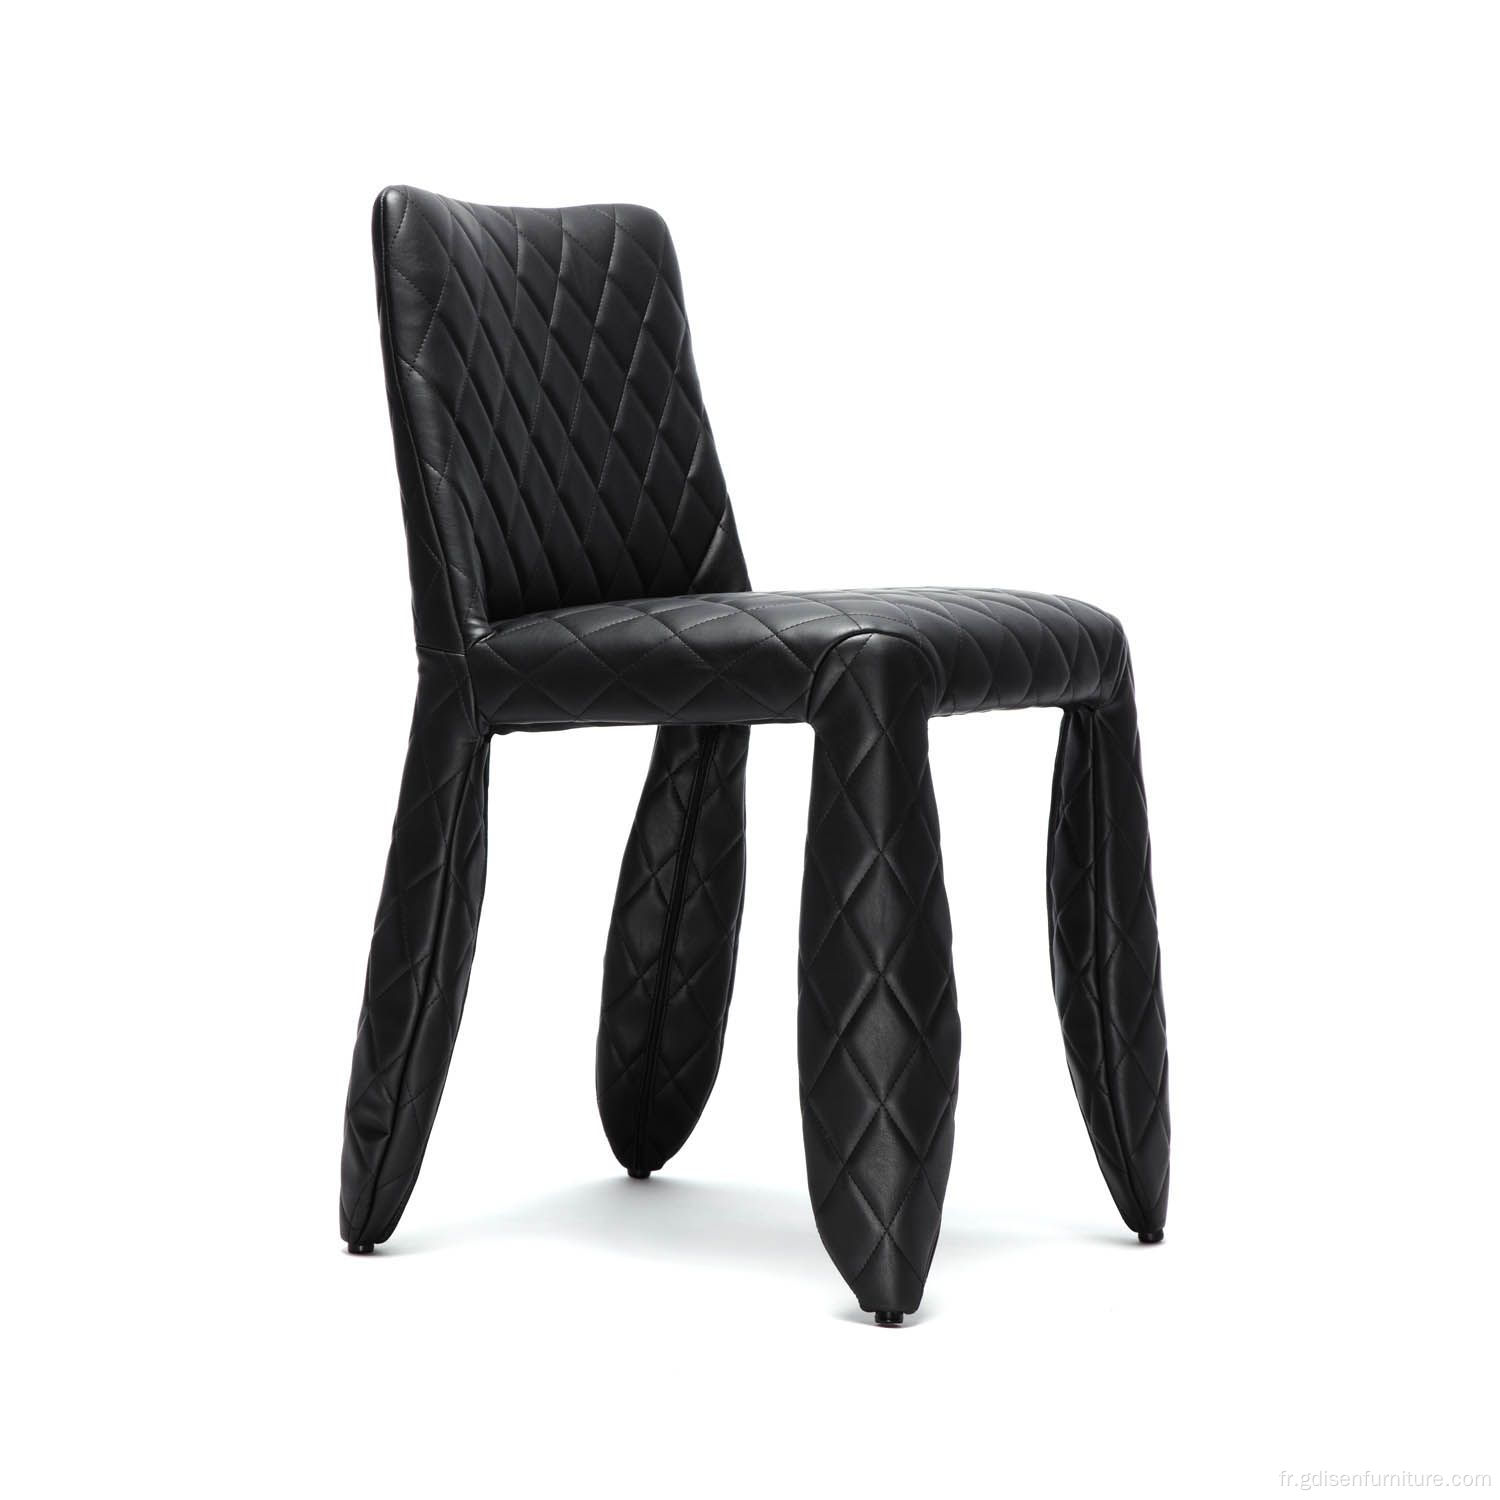 Design contemporain MOOI MONSTER Failchair Dining Chair